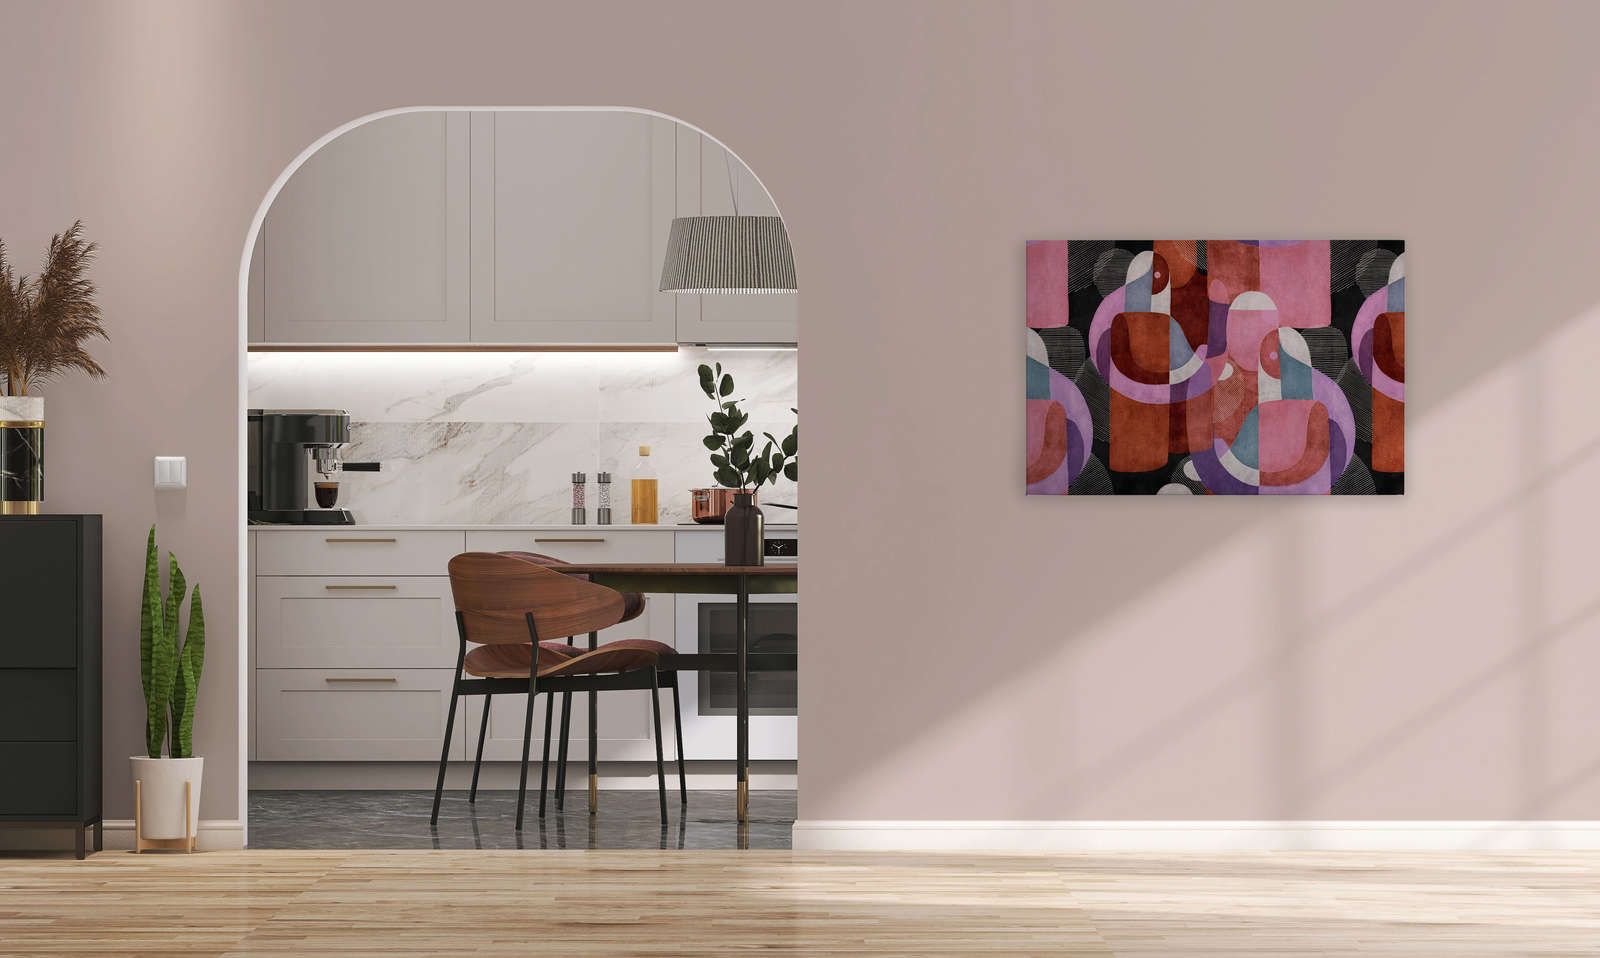             Meeting Place 2 - Canvas schilderij abstract etno design in zwart & roze - 0,90 m x 0,60 m
        